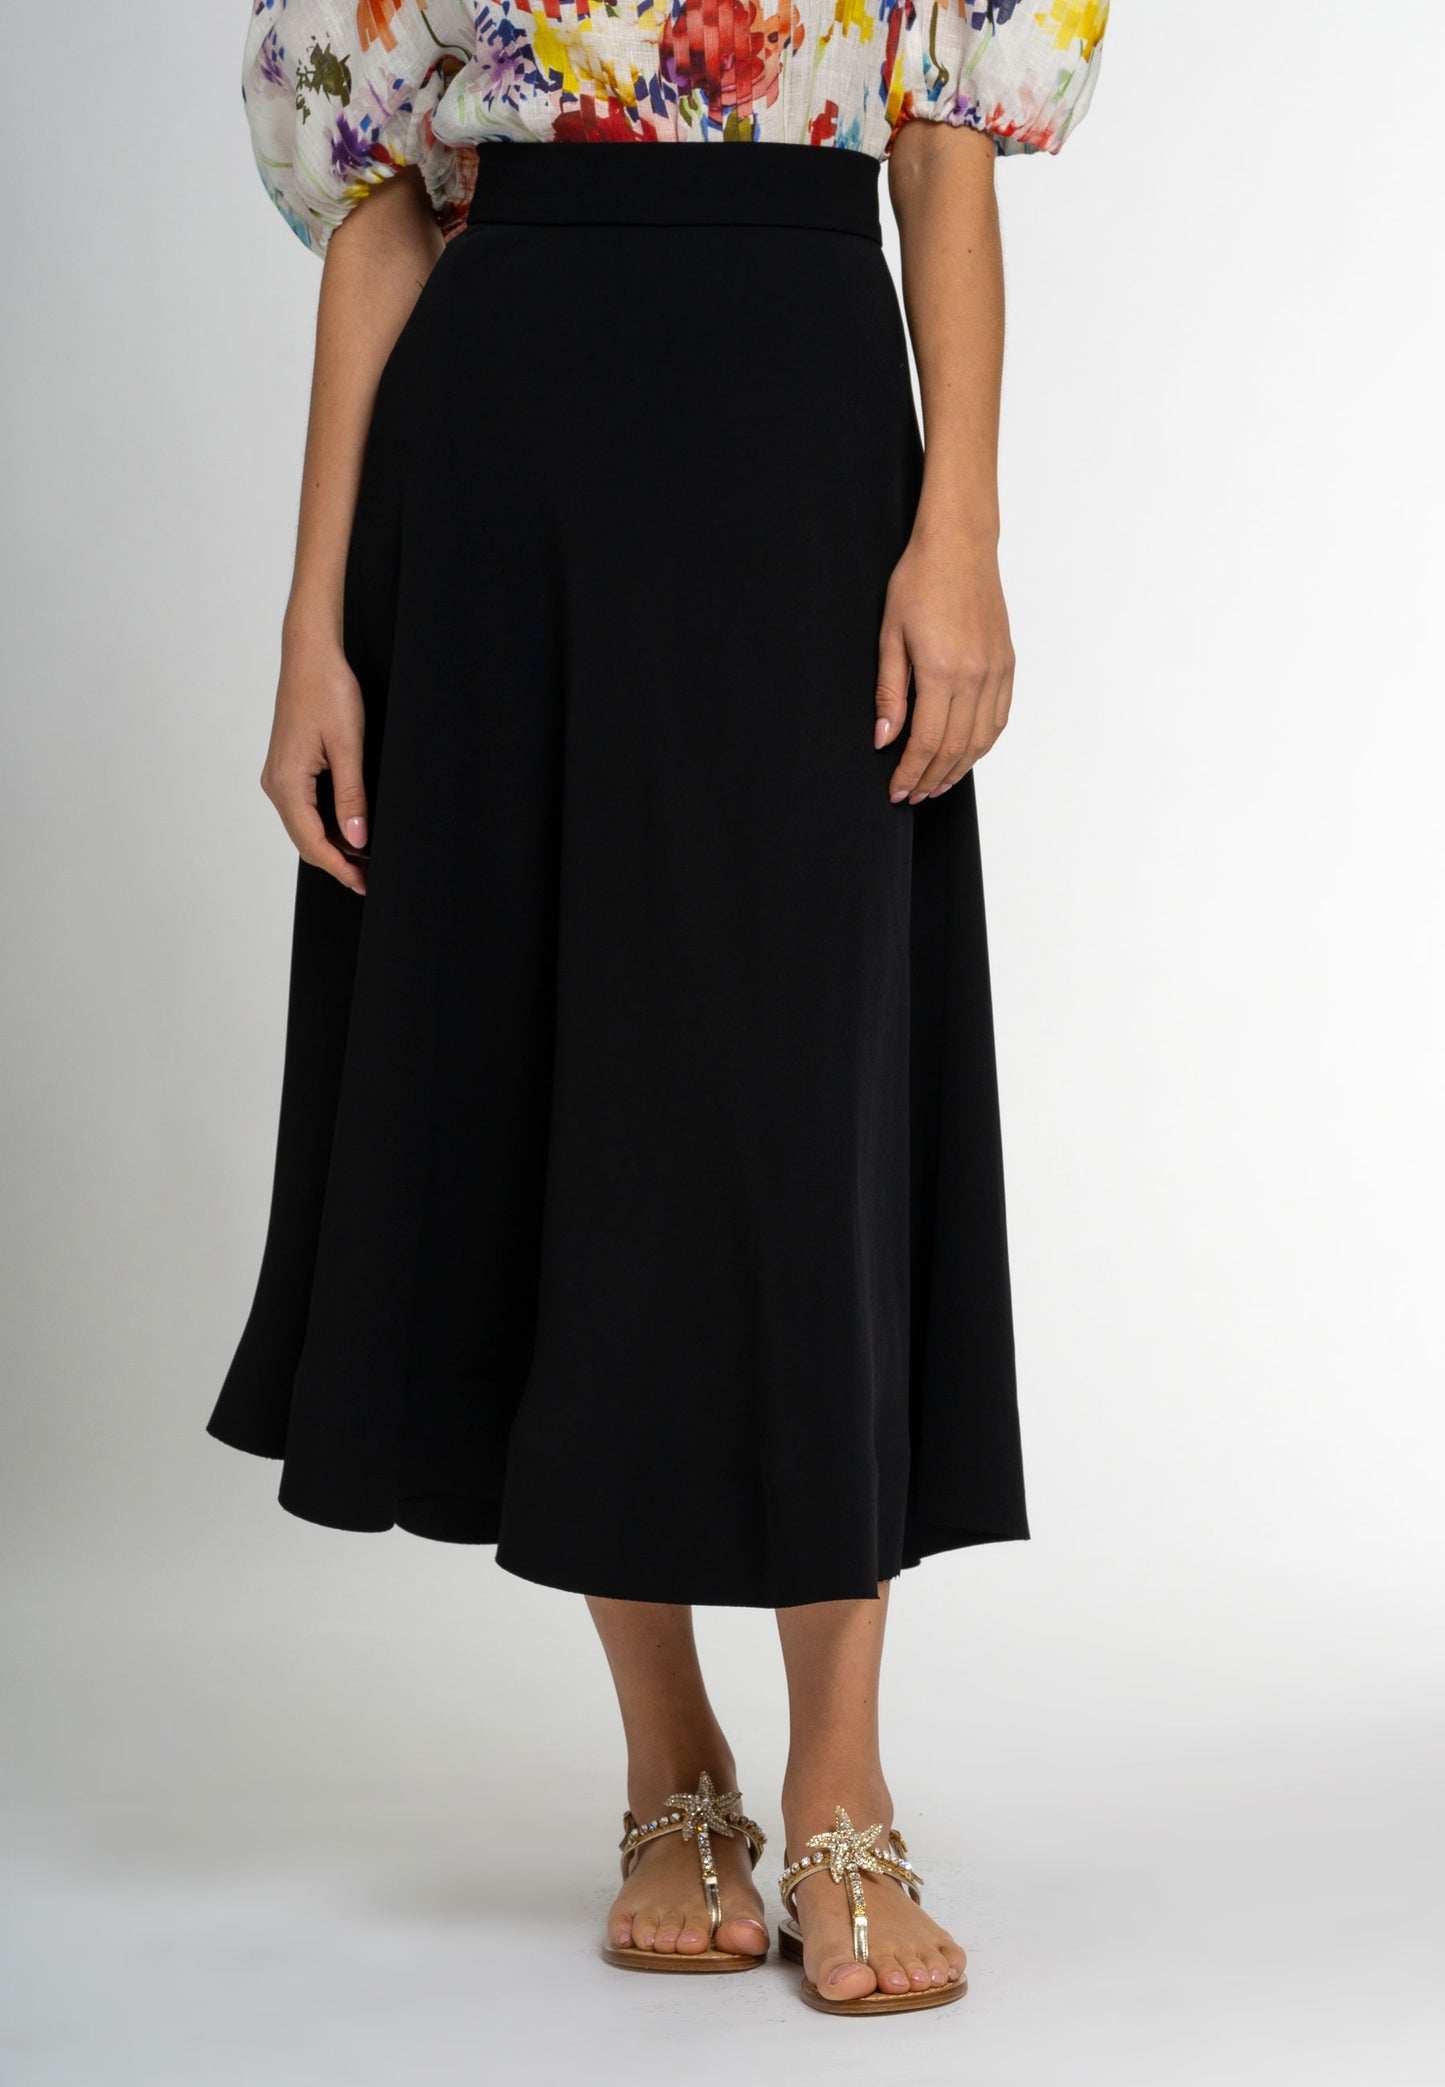 Lilli A-Line Midi skirt, black skirt, a line skirt, maxi skirt, high waist skirt, Lilli Silk blouse, lilli skirt, midi skirt, midi length skirt, long skirt, maxi skirt, maxi length skirt